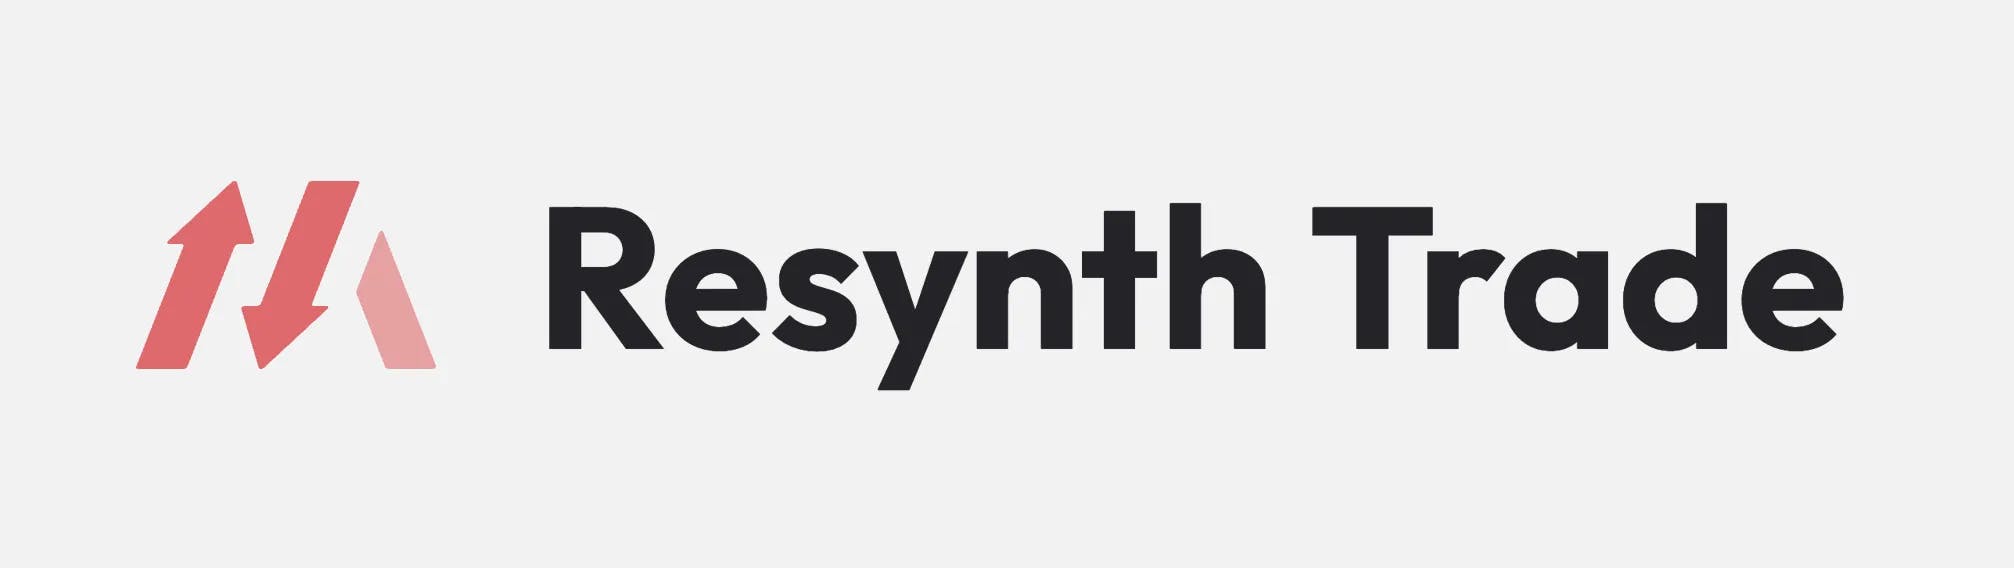 Resynth Trade